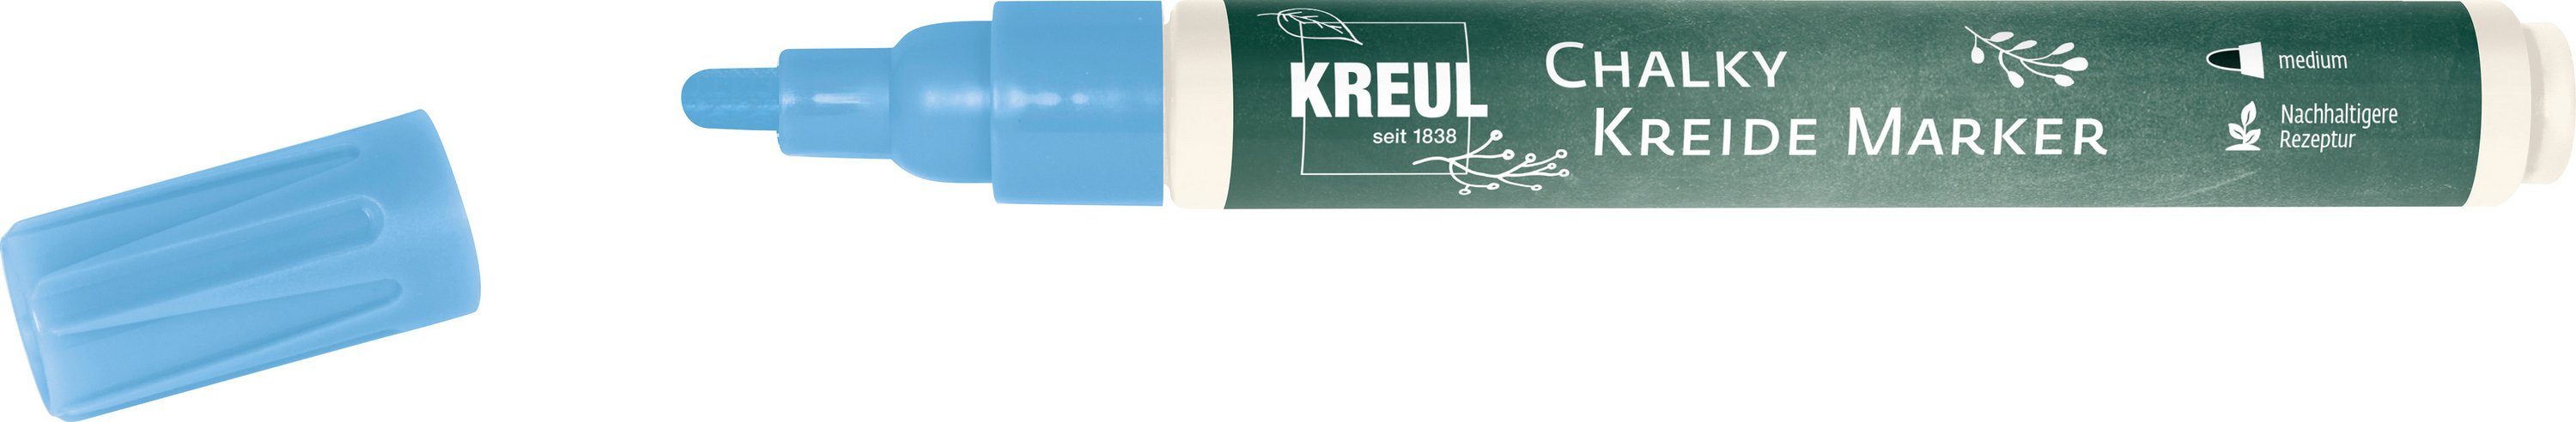 Kreul Kreidemarker Chalky, 2-3mm Strichstärke Nordic Blue | Marker